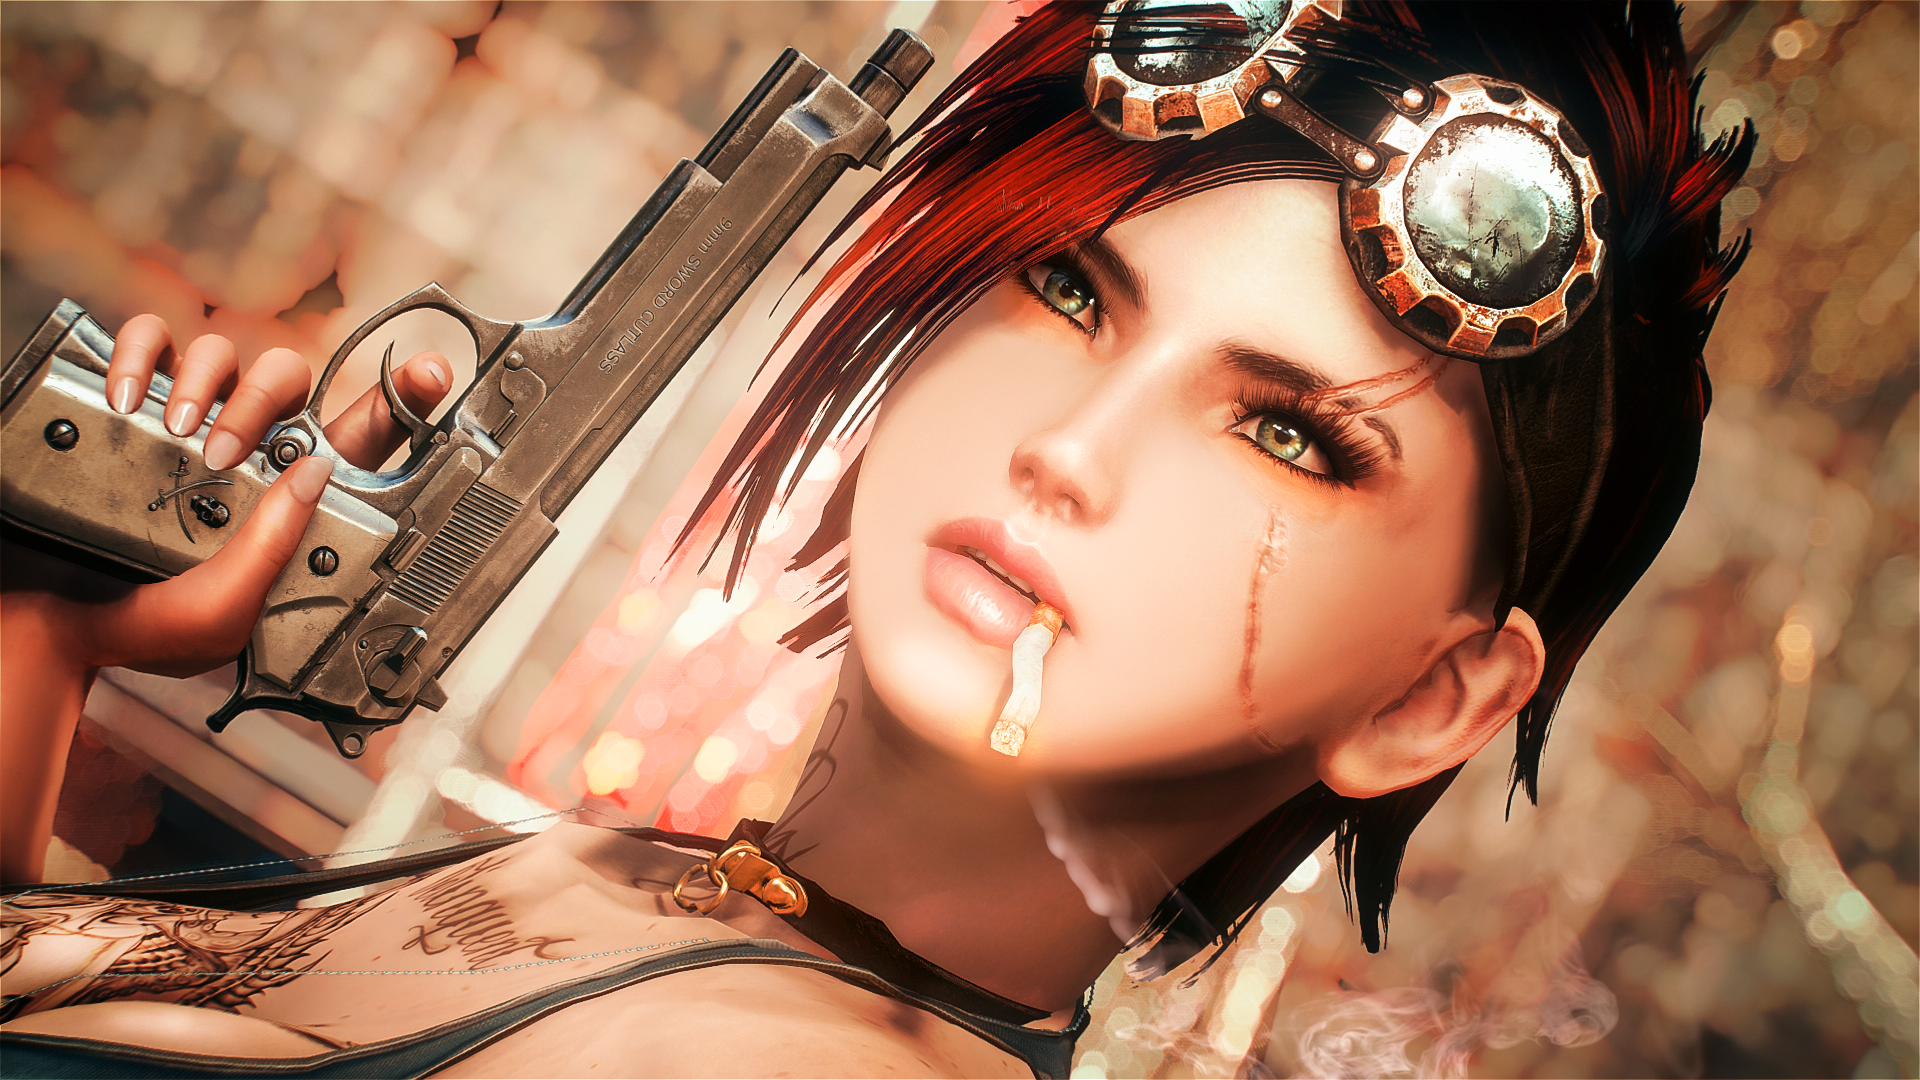 General 1920x1080 Fallout 4 Fallout video games video game girls gun weapon women girls with guns redhead cigarettes PC gaming